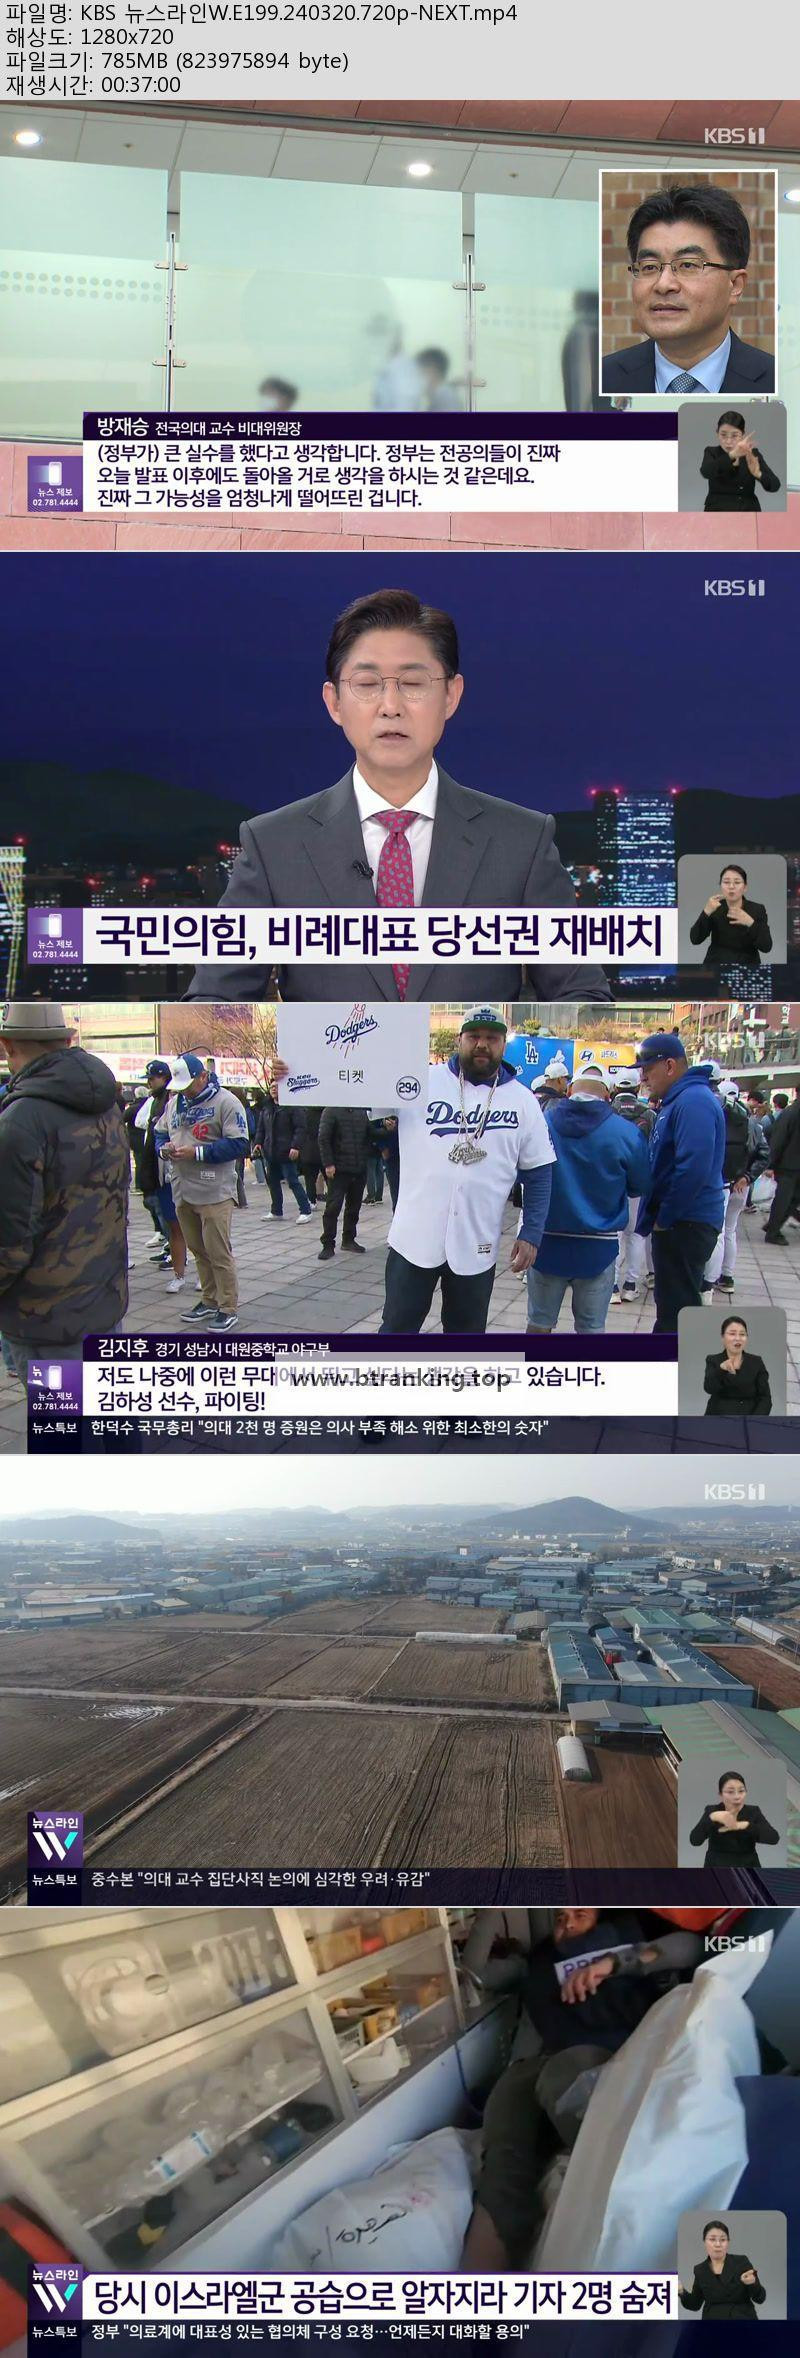 KBS 뉴스라인W.E199.240320.720p-NEXT